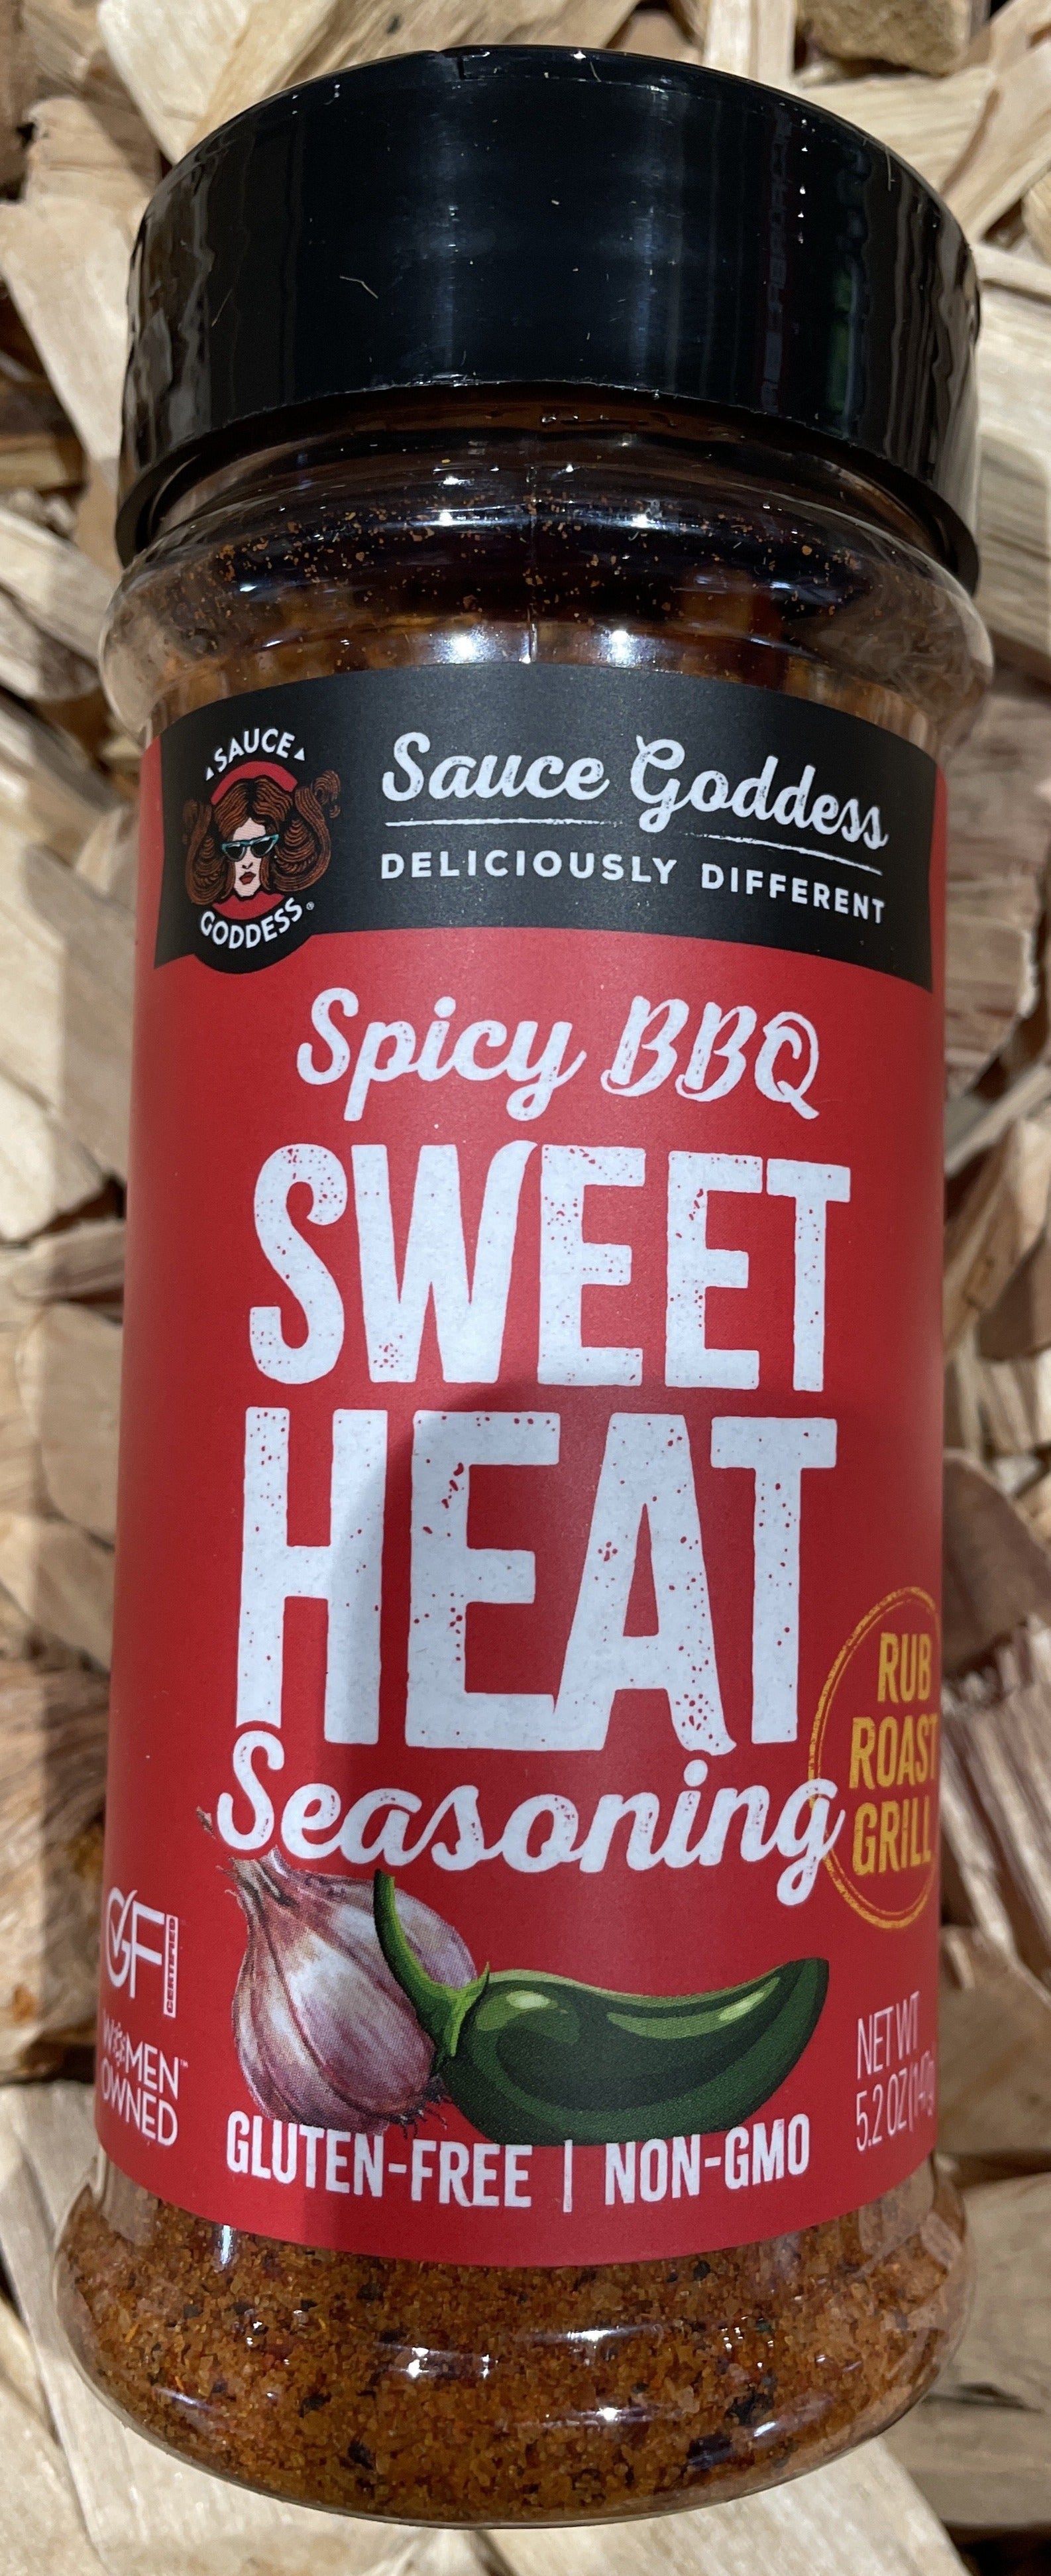 Sauce Goddess - Spicy BBQ Sweet Heat